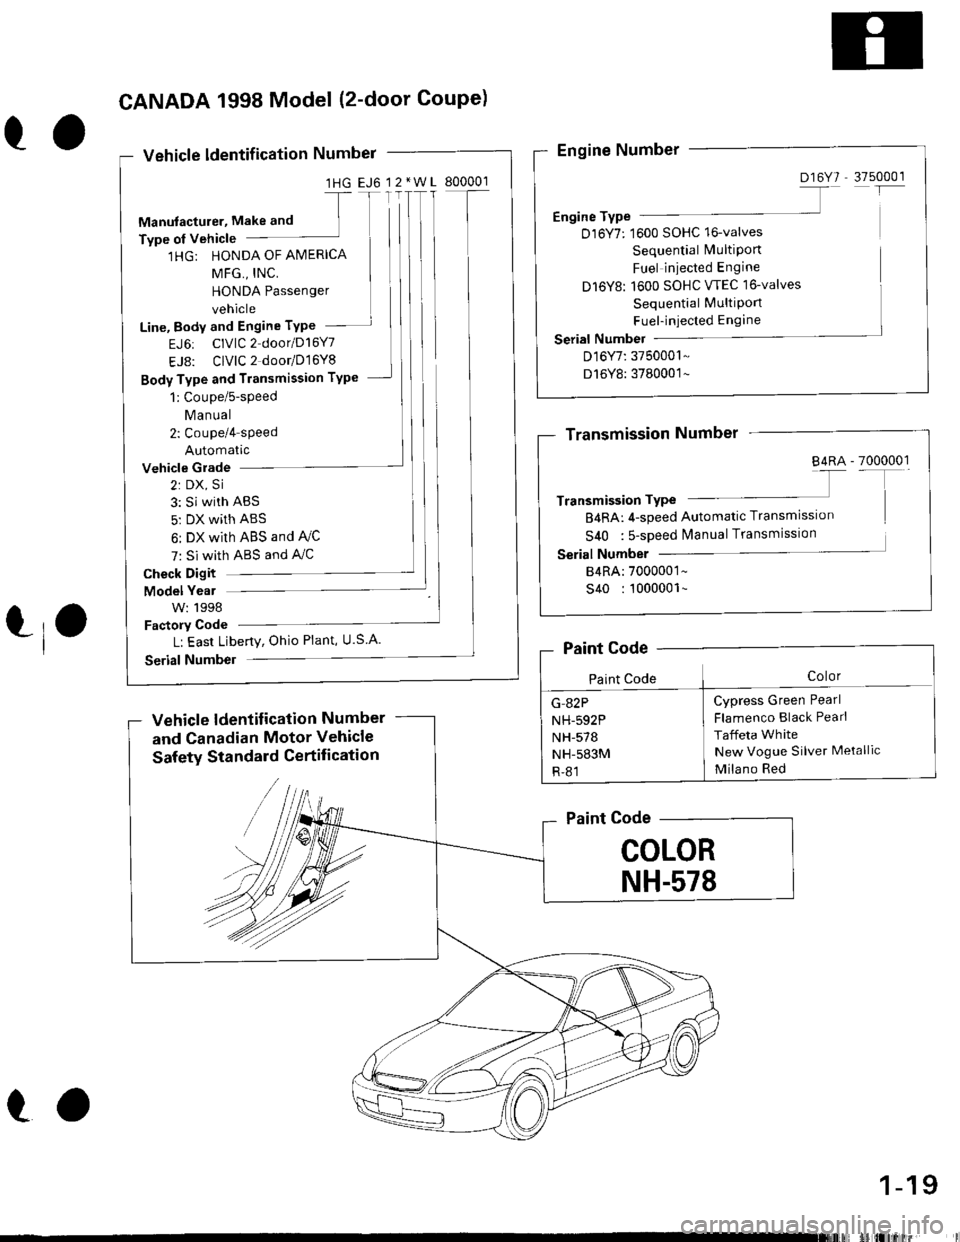 HONDA CIVIC 1999 6.G Workshop Manual Vehicle ldentif ication Numbel
1HG EJ6 12*W
1HG: HONDA OF AMERICA
MFG,, INC,
HONDA Passenger
vehicle
Line, Body and Engine TYPe
EJ6: CIVIC 2 door/D16Y7
EJ8: CIVIC 2 dootD16Y8
Body Type and Transmissio